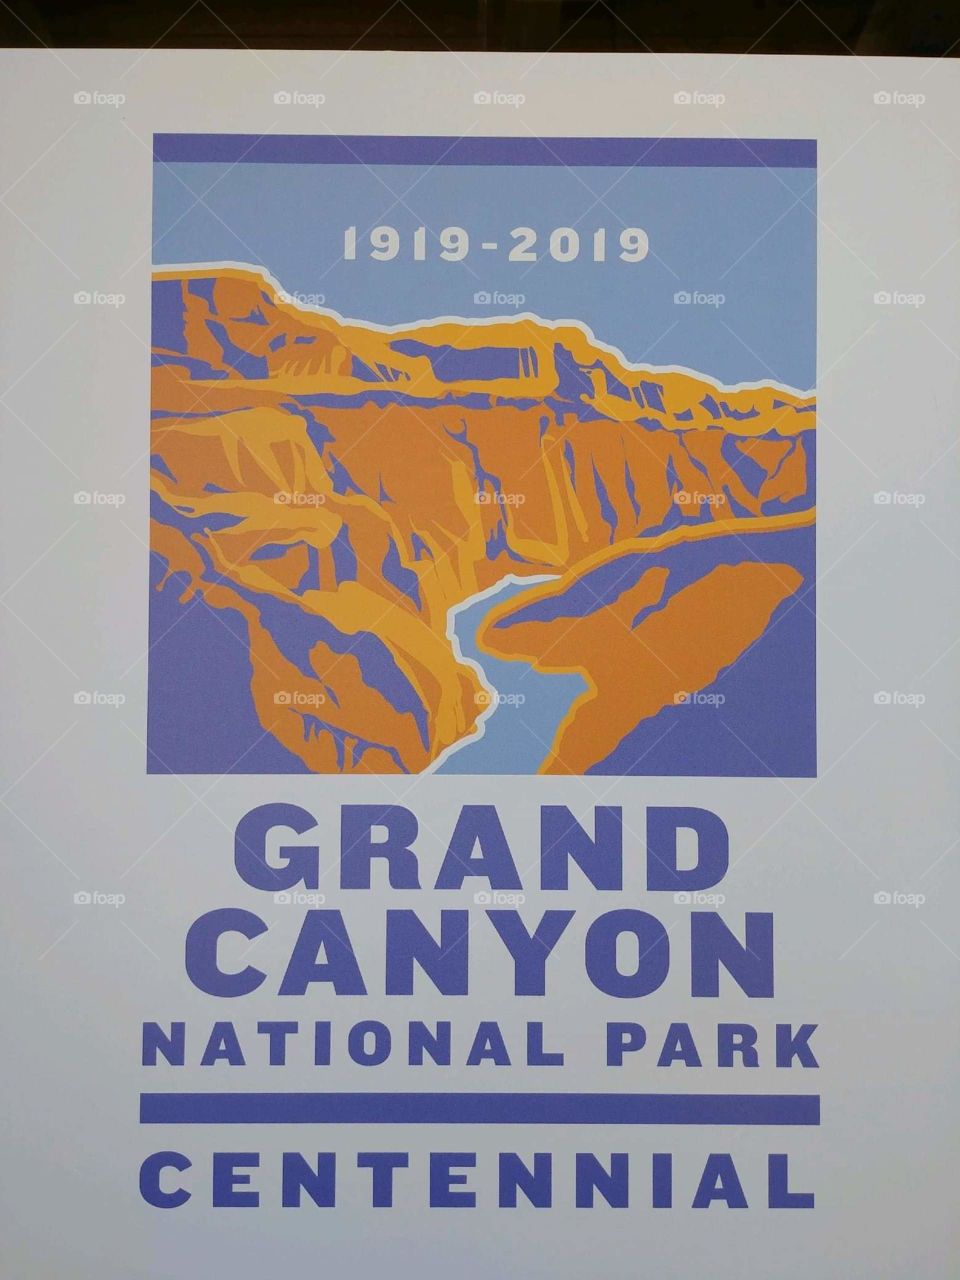 Grand Canyon National Park 100th anniversary